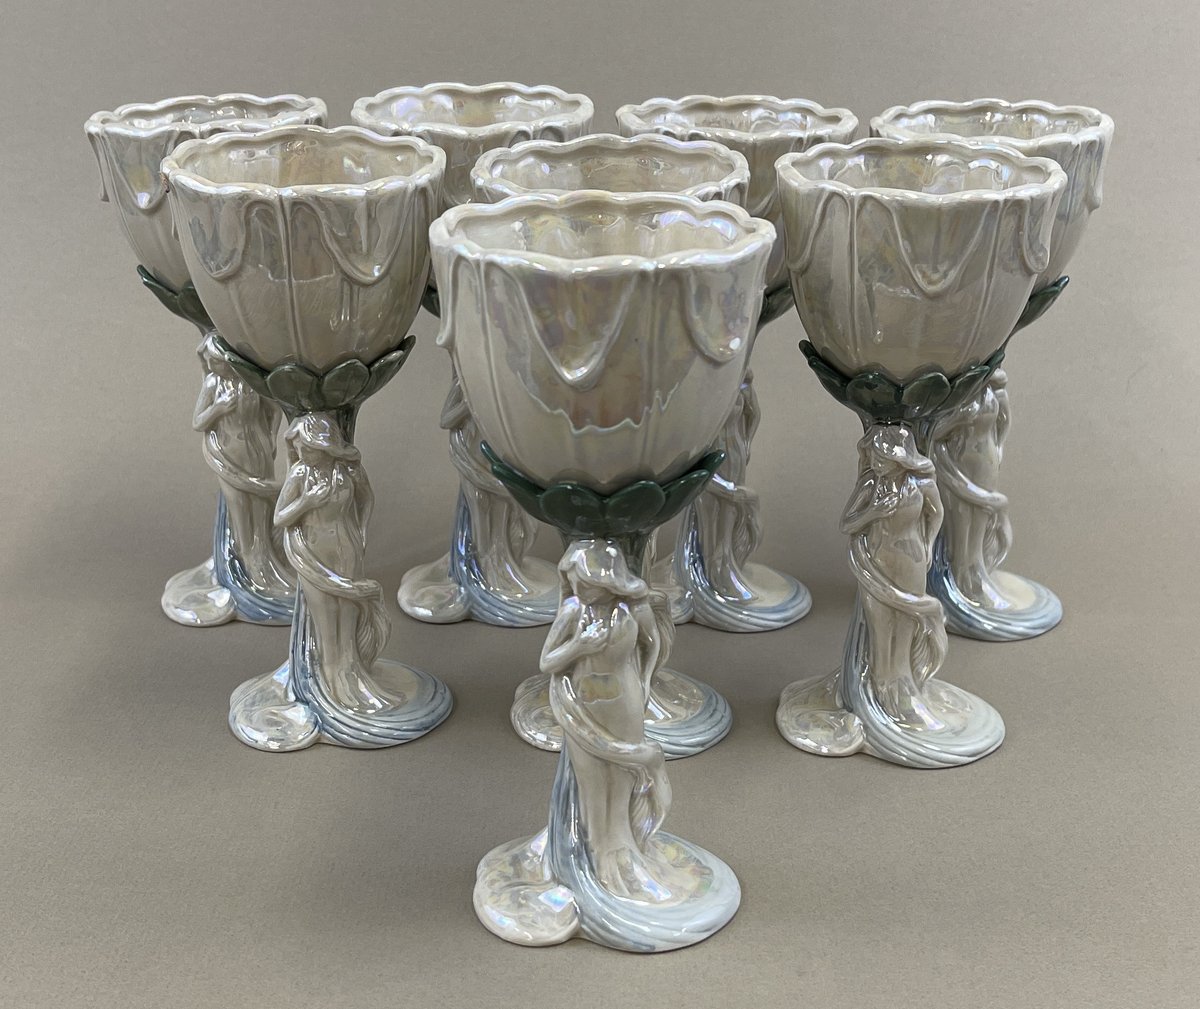 Fitz & Floyd Art Nouveau Lusterware Goblets

Follow the Link ➡️ ebay.com/itm/3345123161…

#fitzfloyd #fitzandfloyd #artnoveau #goblets #winegoblets #vintagegoblets #vintageglassware #lusterware #vintagelusterware #shopsmall